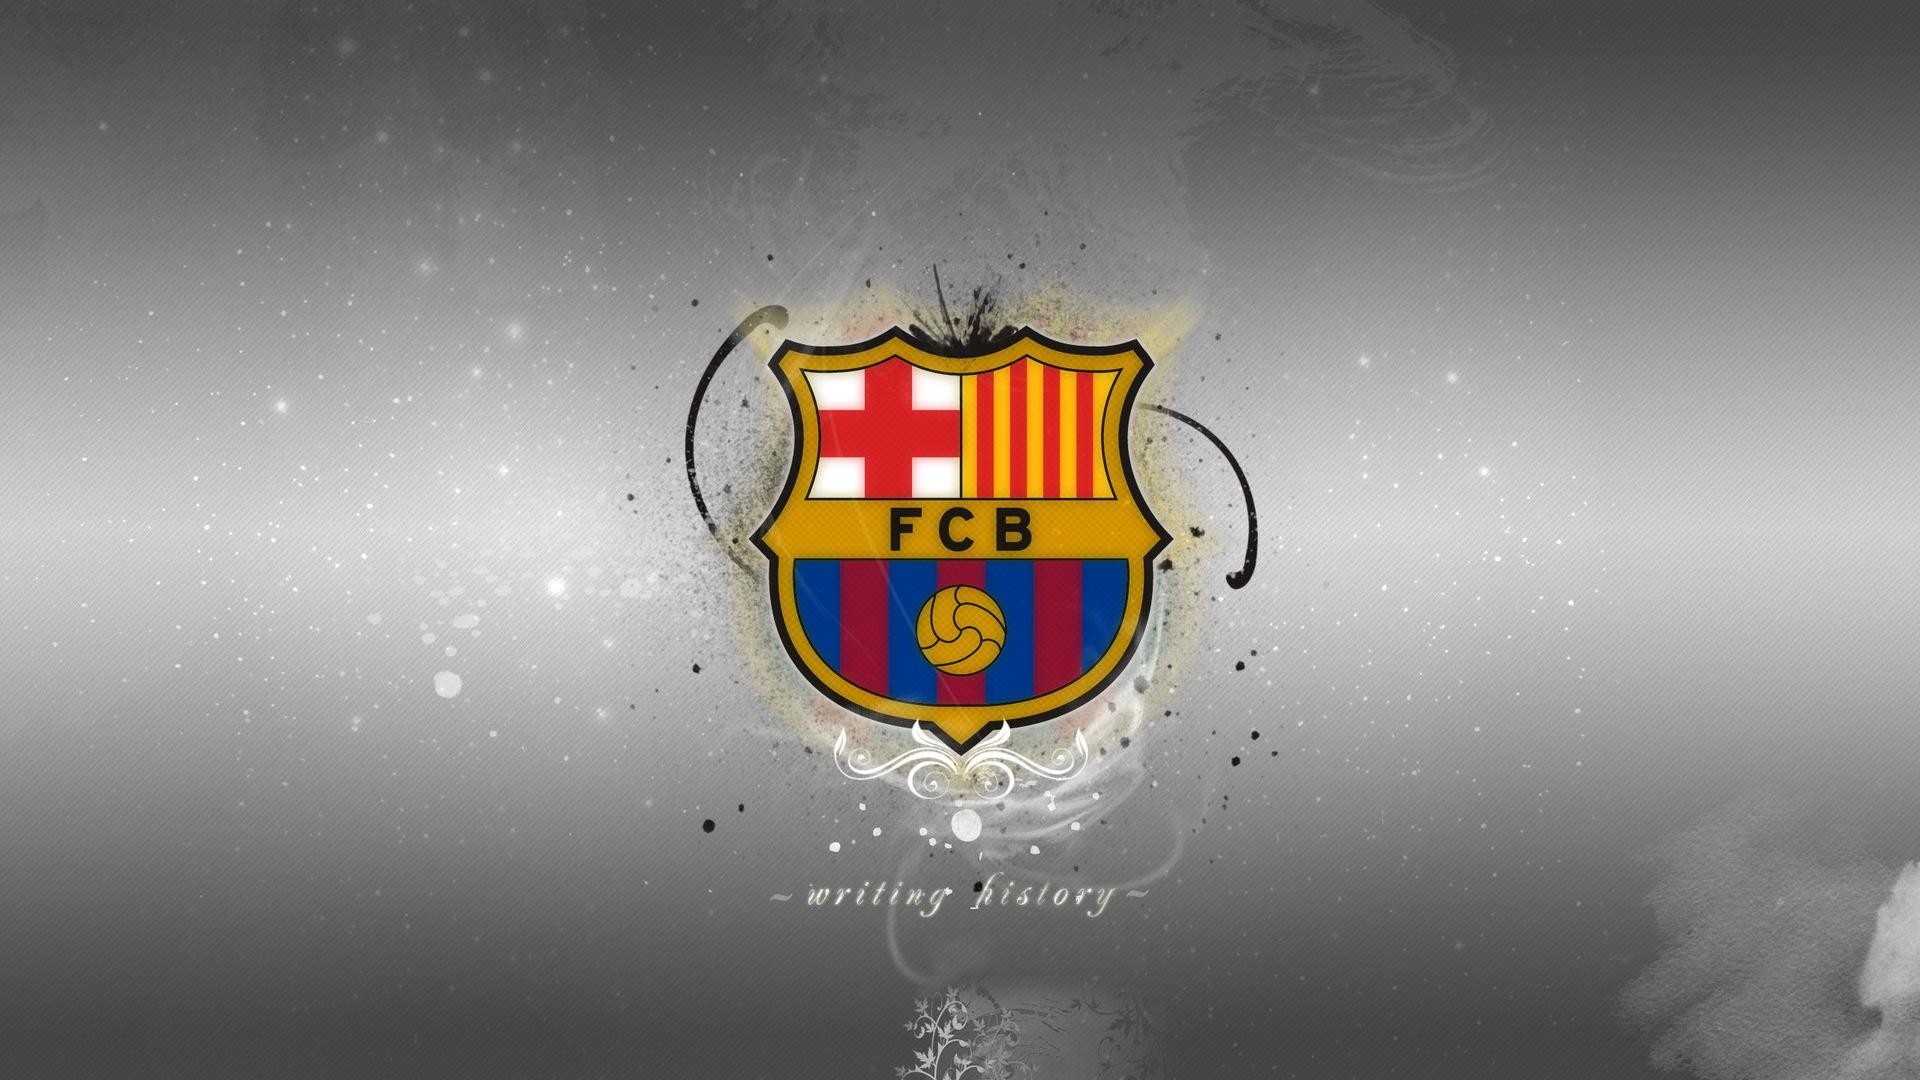 1920x1080 Download Fullsize Image Â· Barcelona FC Logo Cool Soccer Wallpapers 